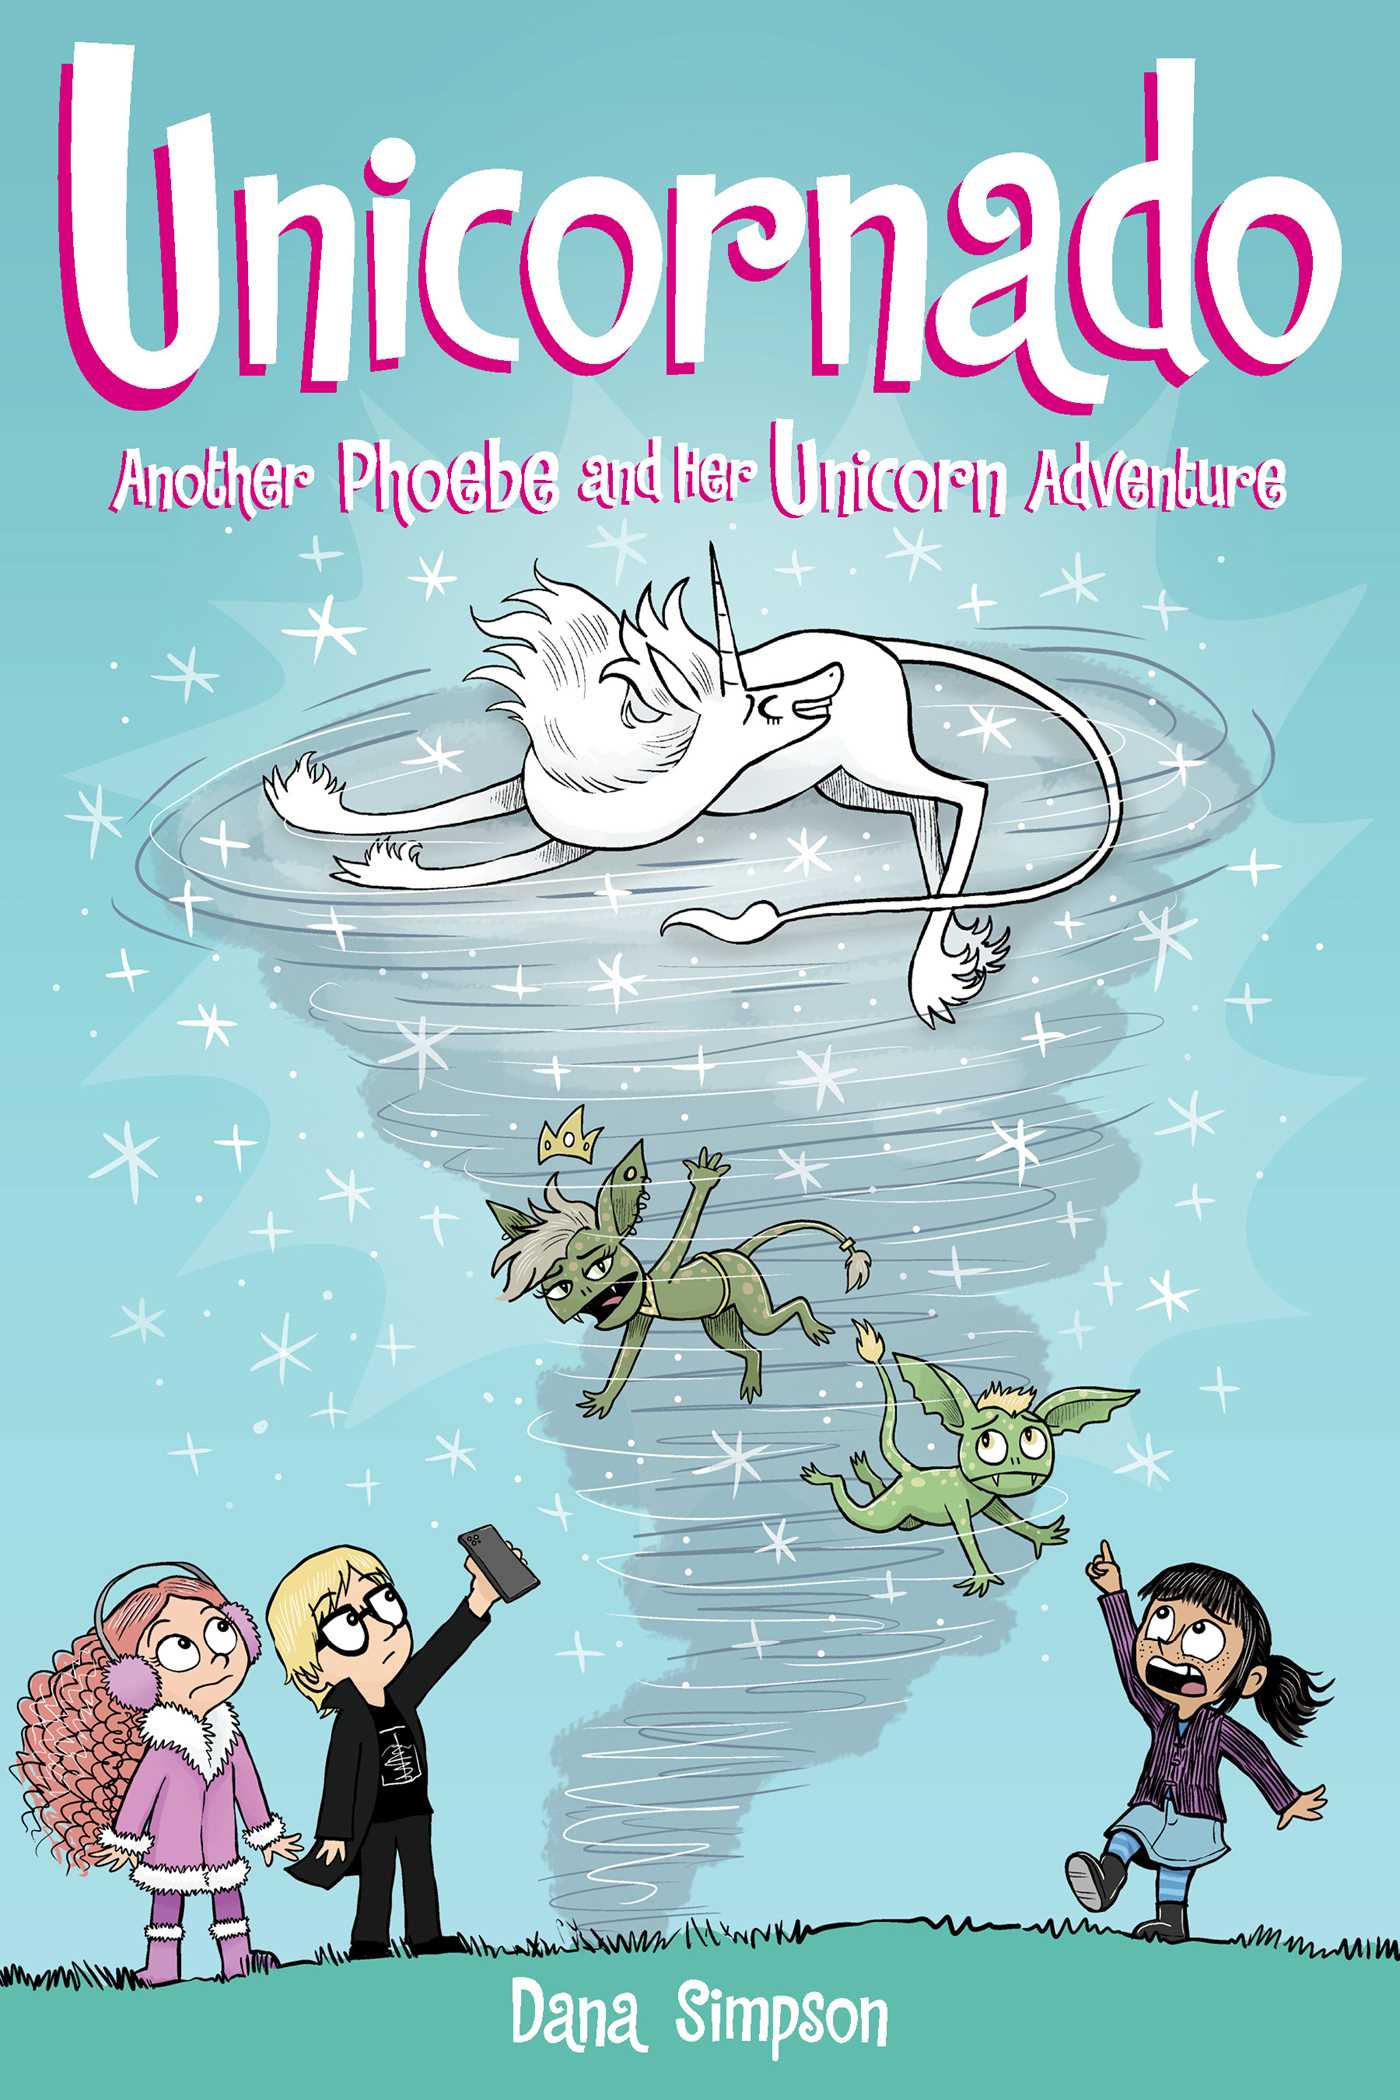 Another Phoebe and Her Unicorn Adventure Vol.16 - Unicornado | Simpson, Dana